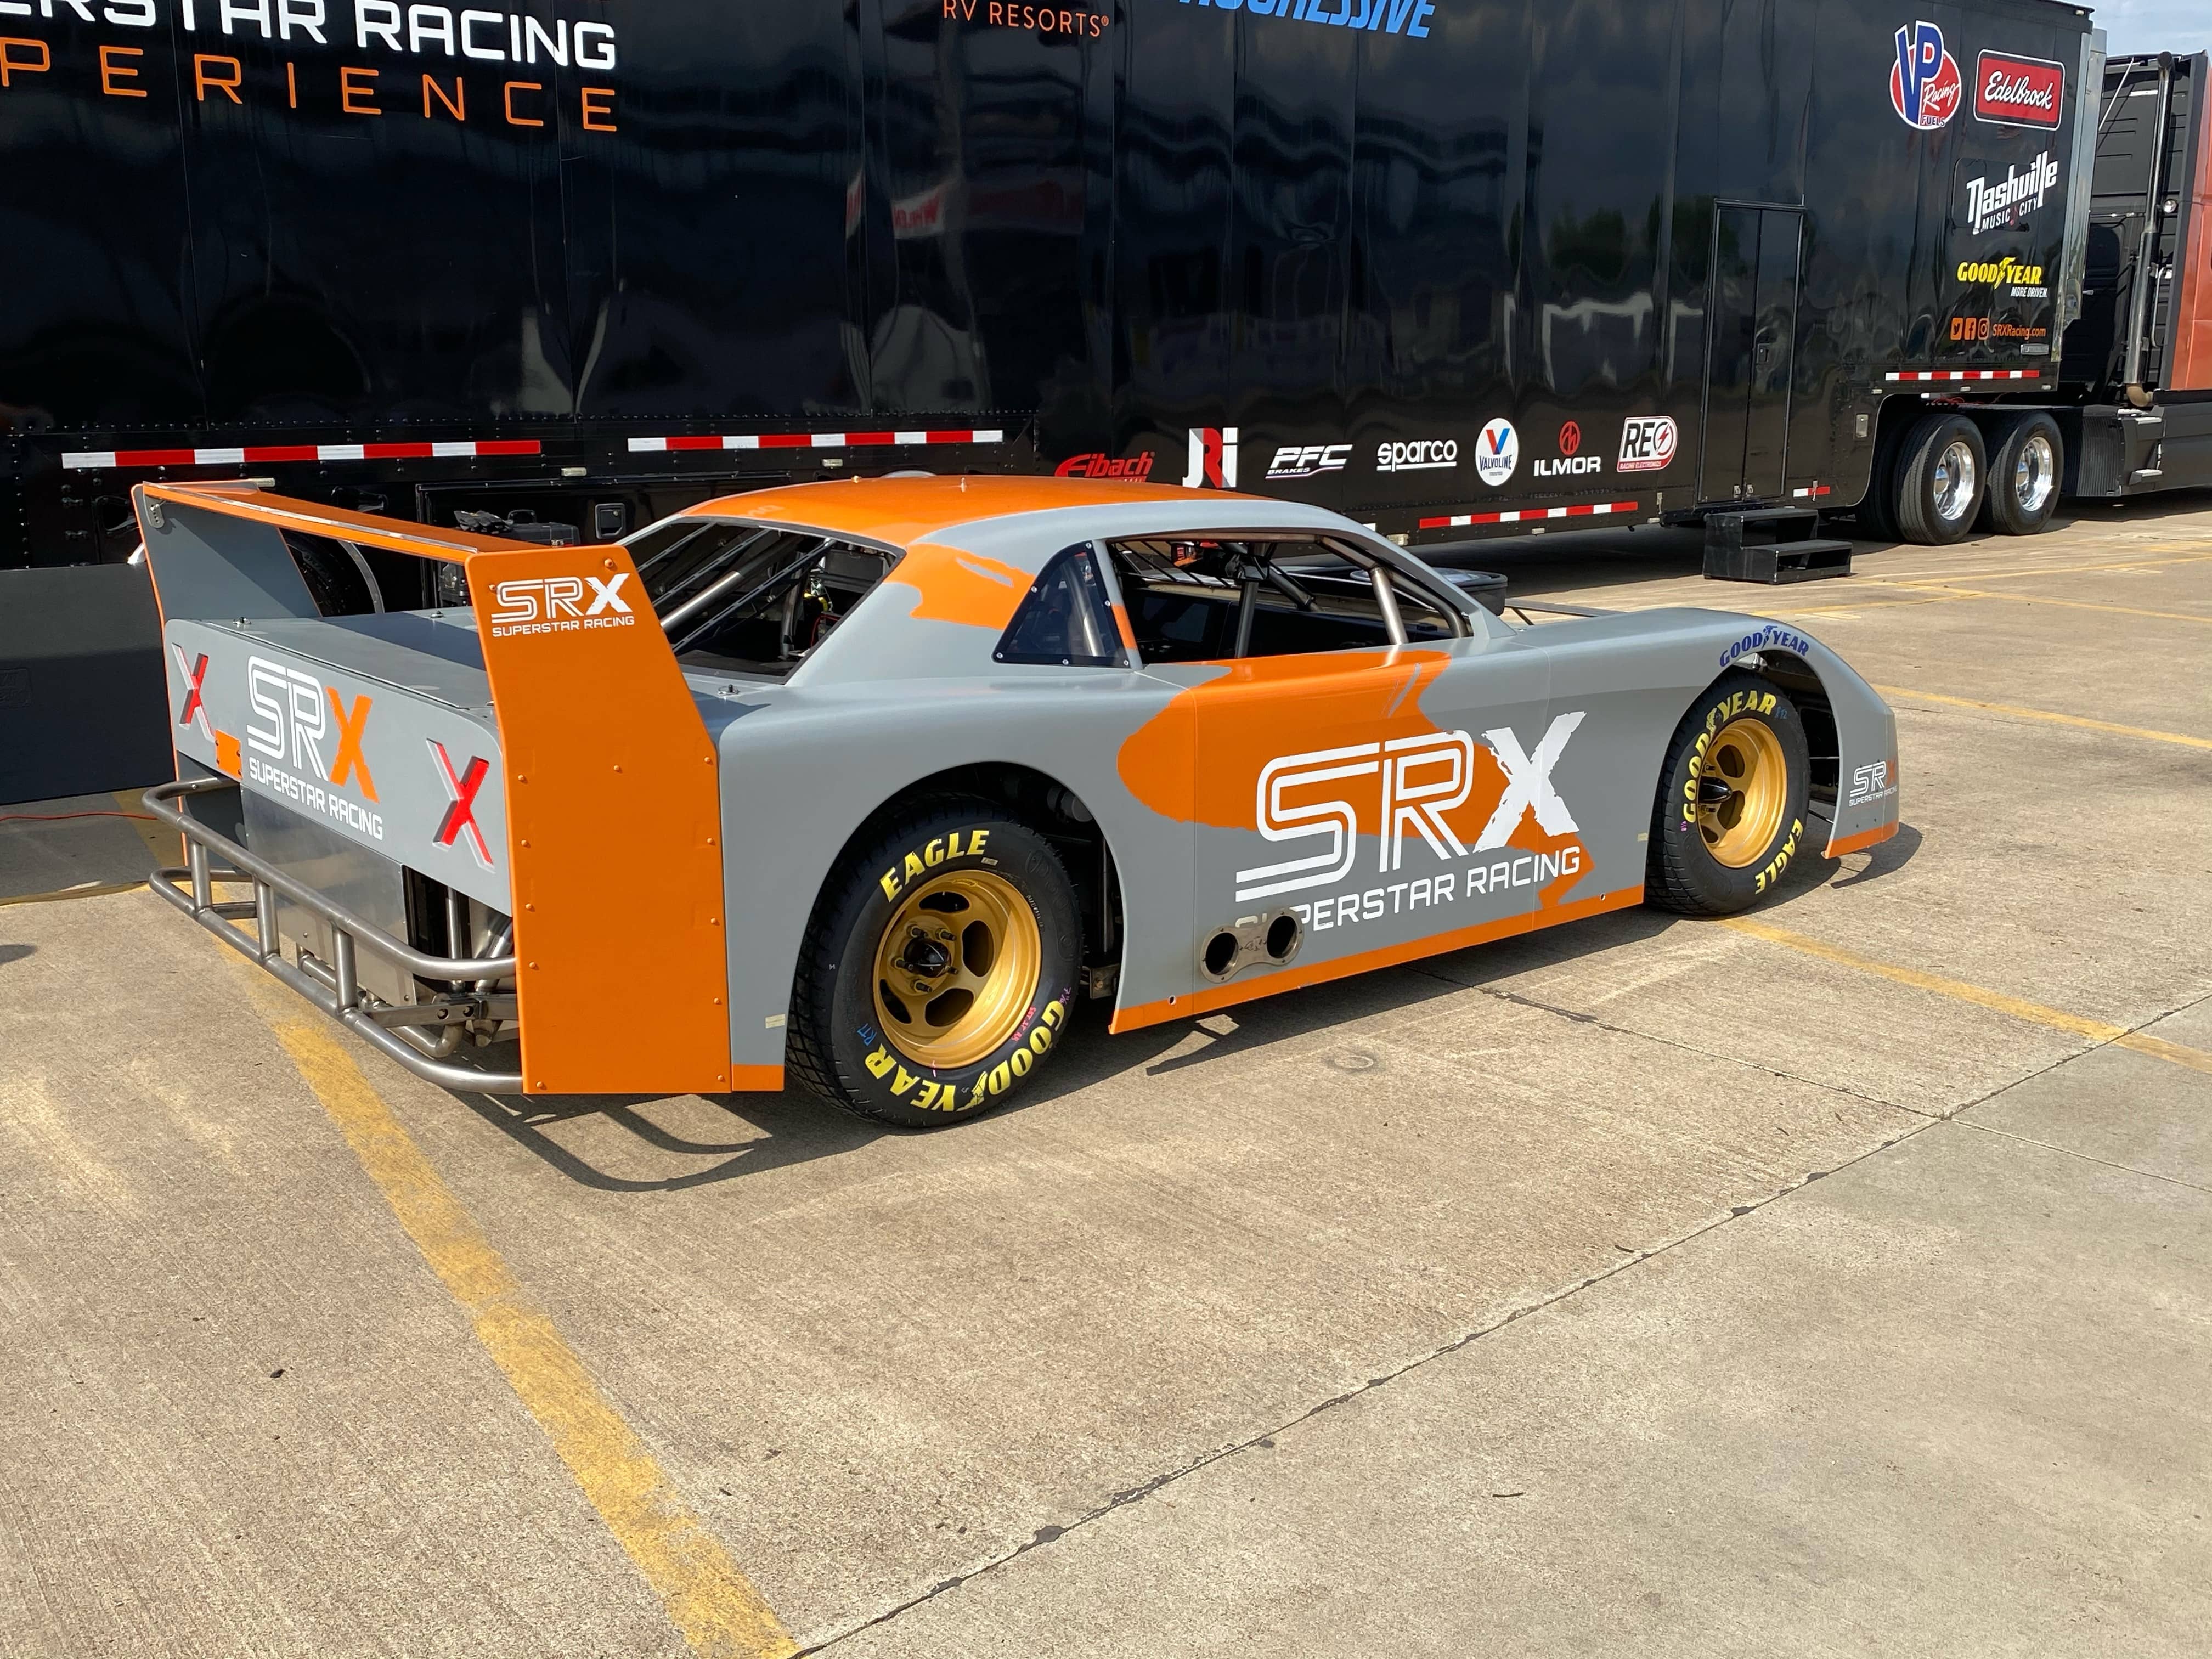 SRX Cars Run Test Laps At The Knoxville Raceway KNIA KRLS Radio The